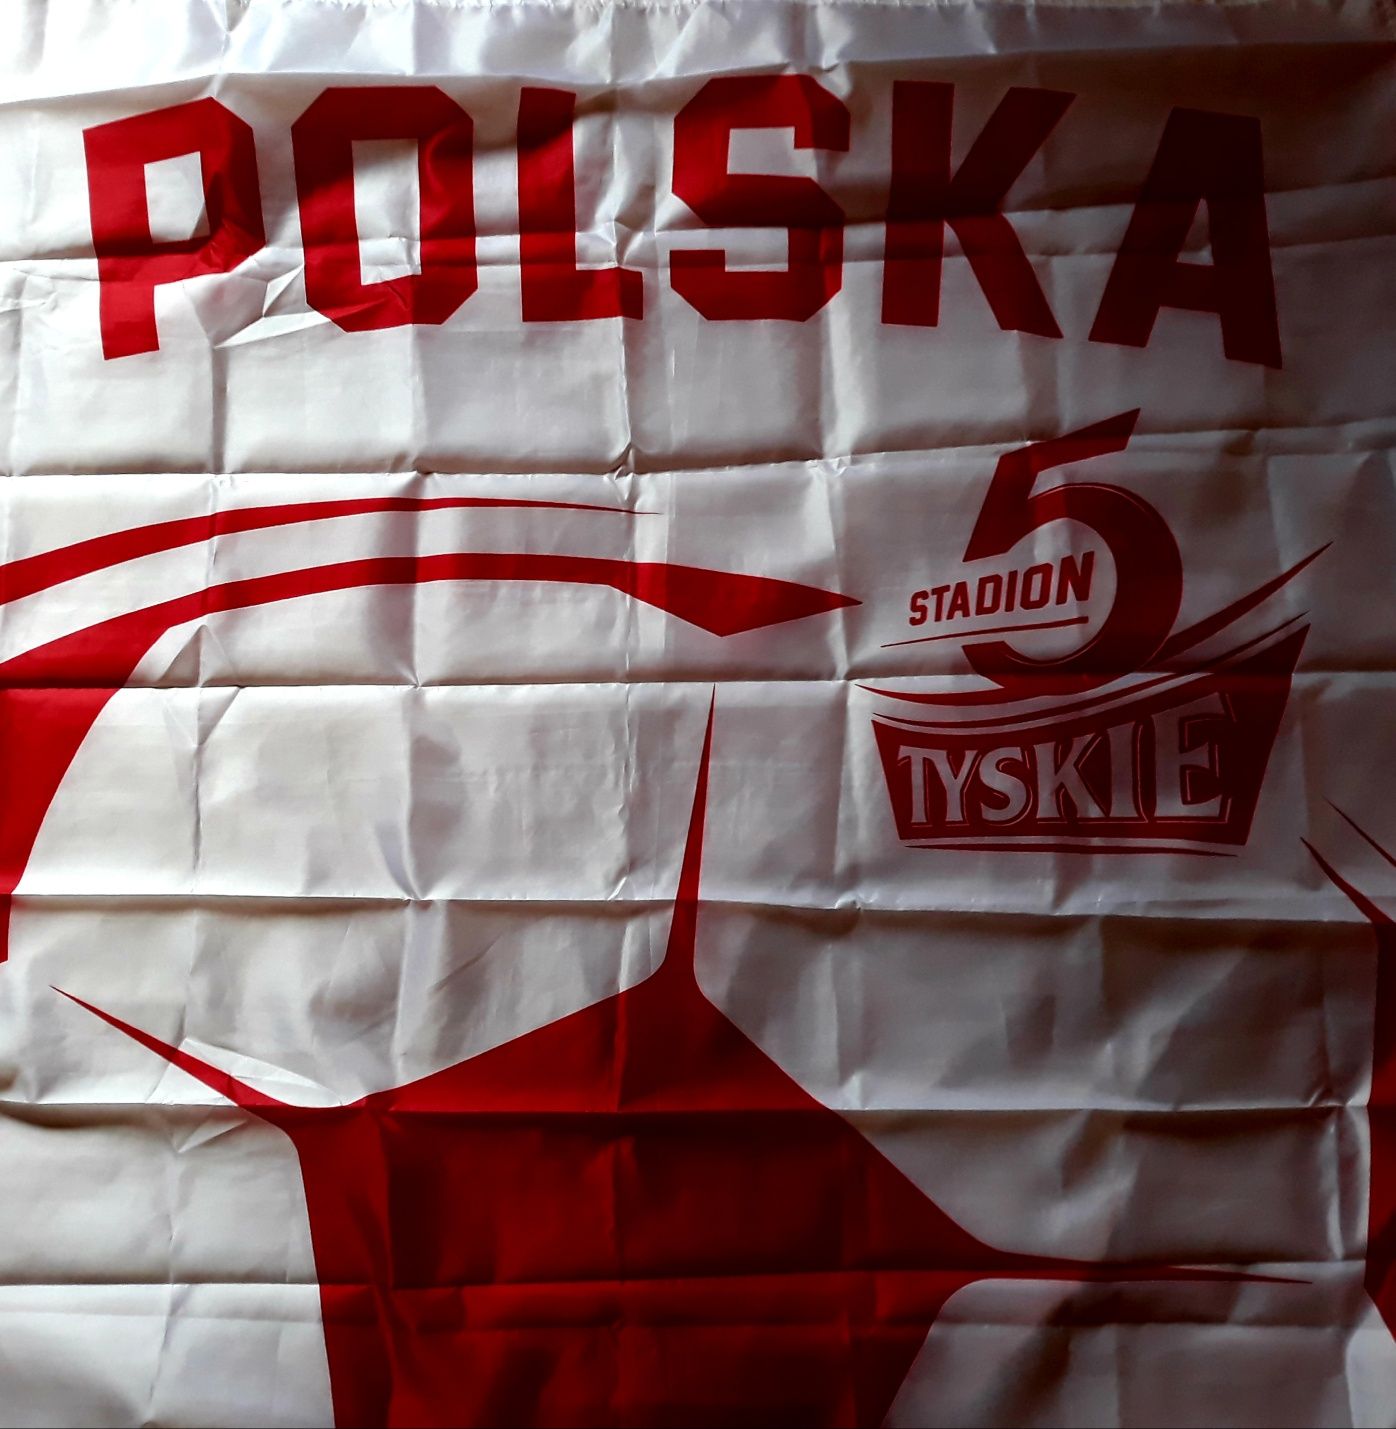 Flaga POLSKA, Tyskie 5Ty stadion, dla kolekcjonera.